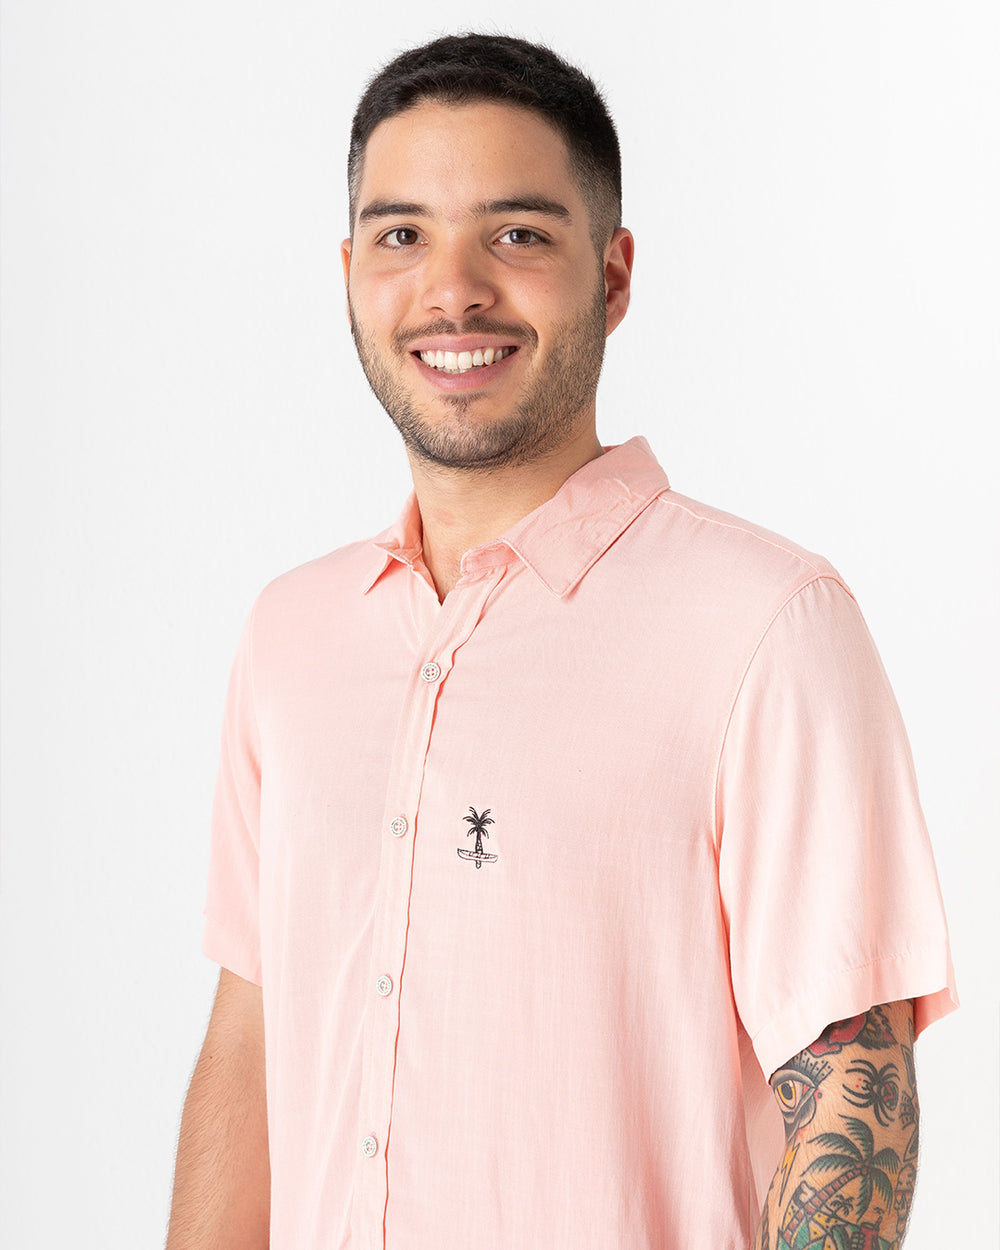 Pantera Rosa (Camisa hombre)